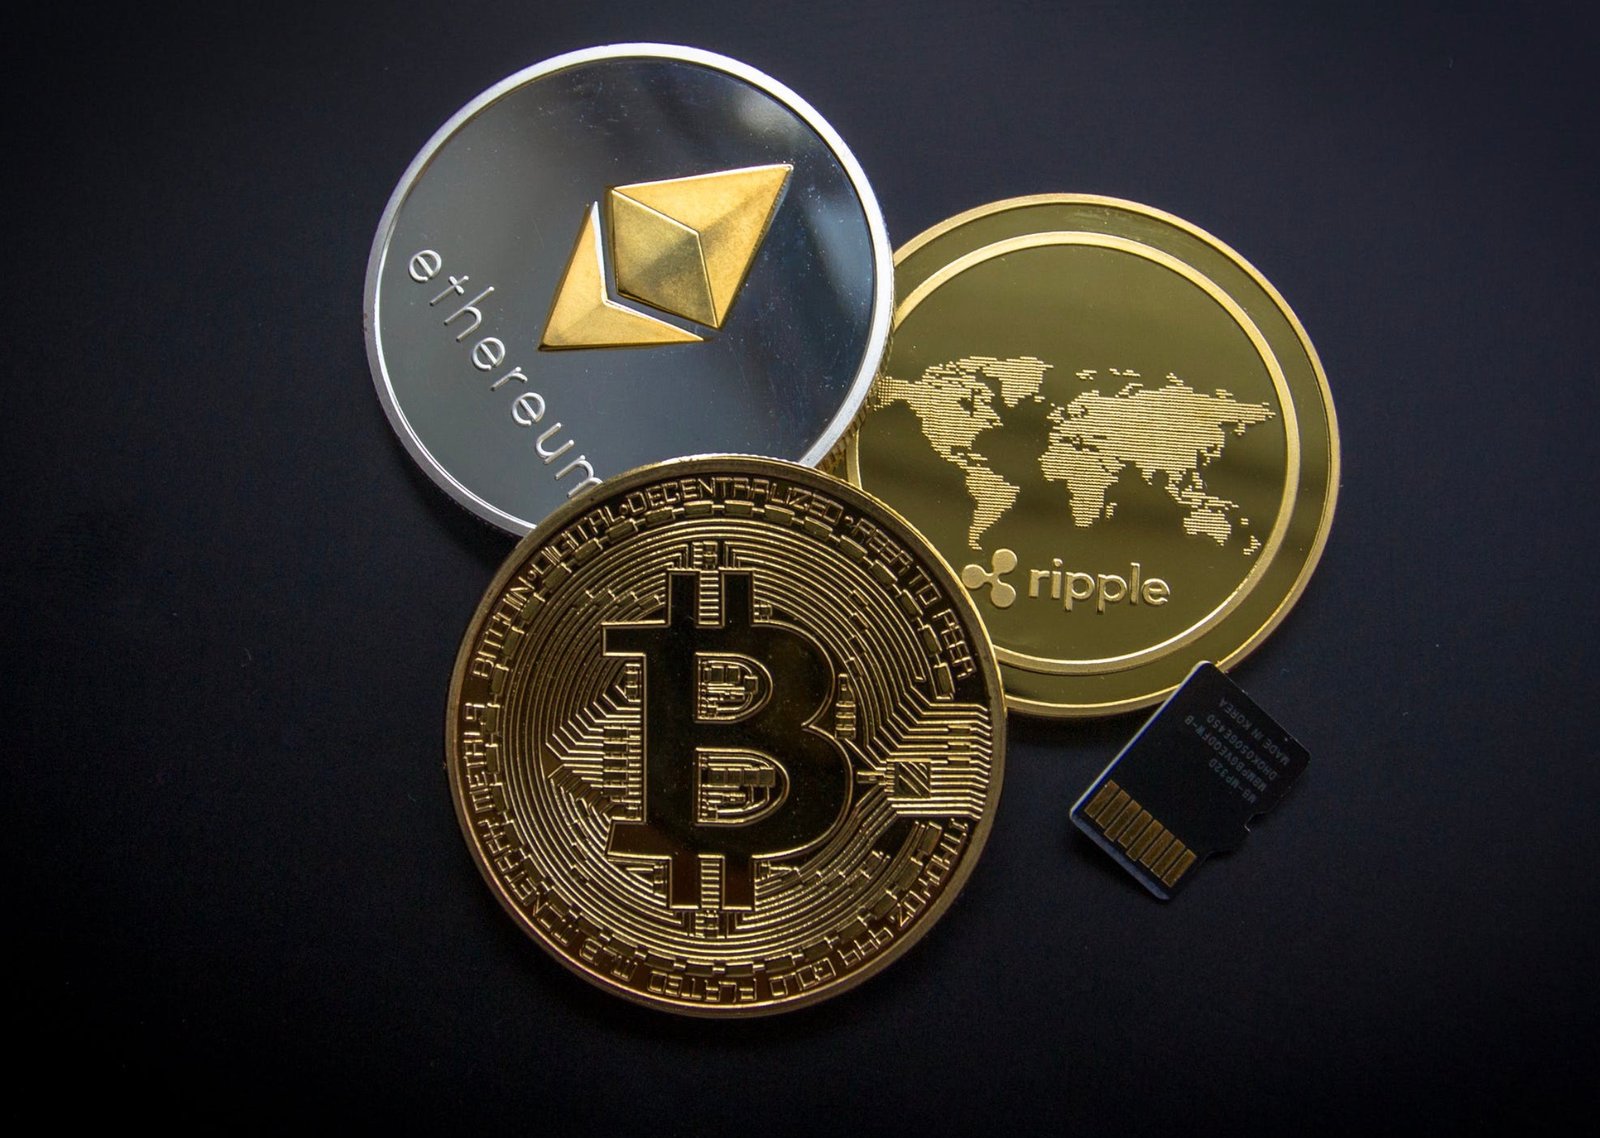 Crypto.com buy coin 0.42323336 bitcoin cash converted to usd